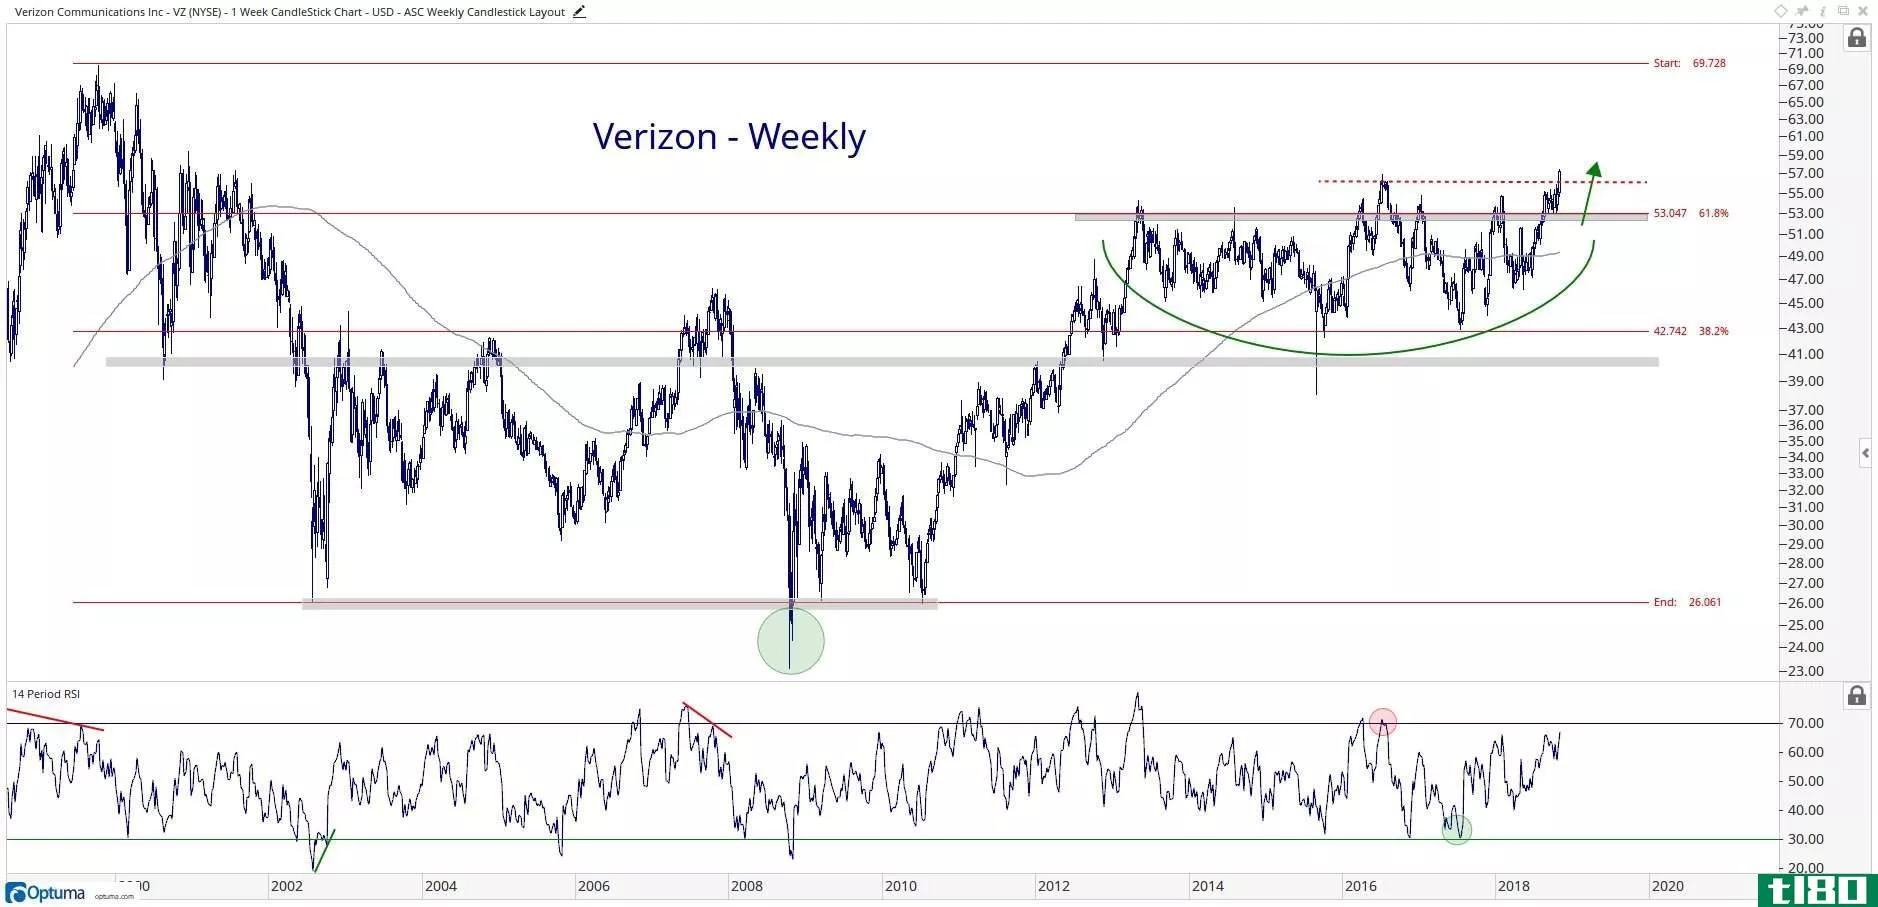 Weekly technical chart showing the performance of Verizon Communicati*** Inc. (VZ) stock